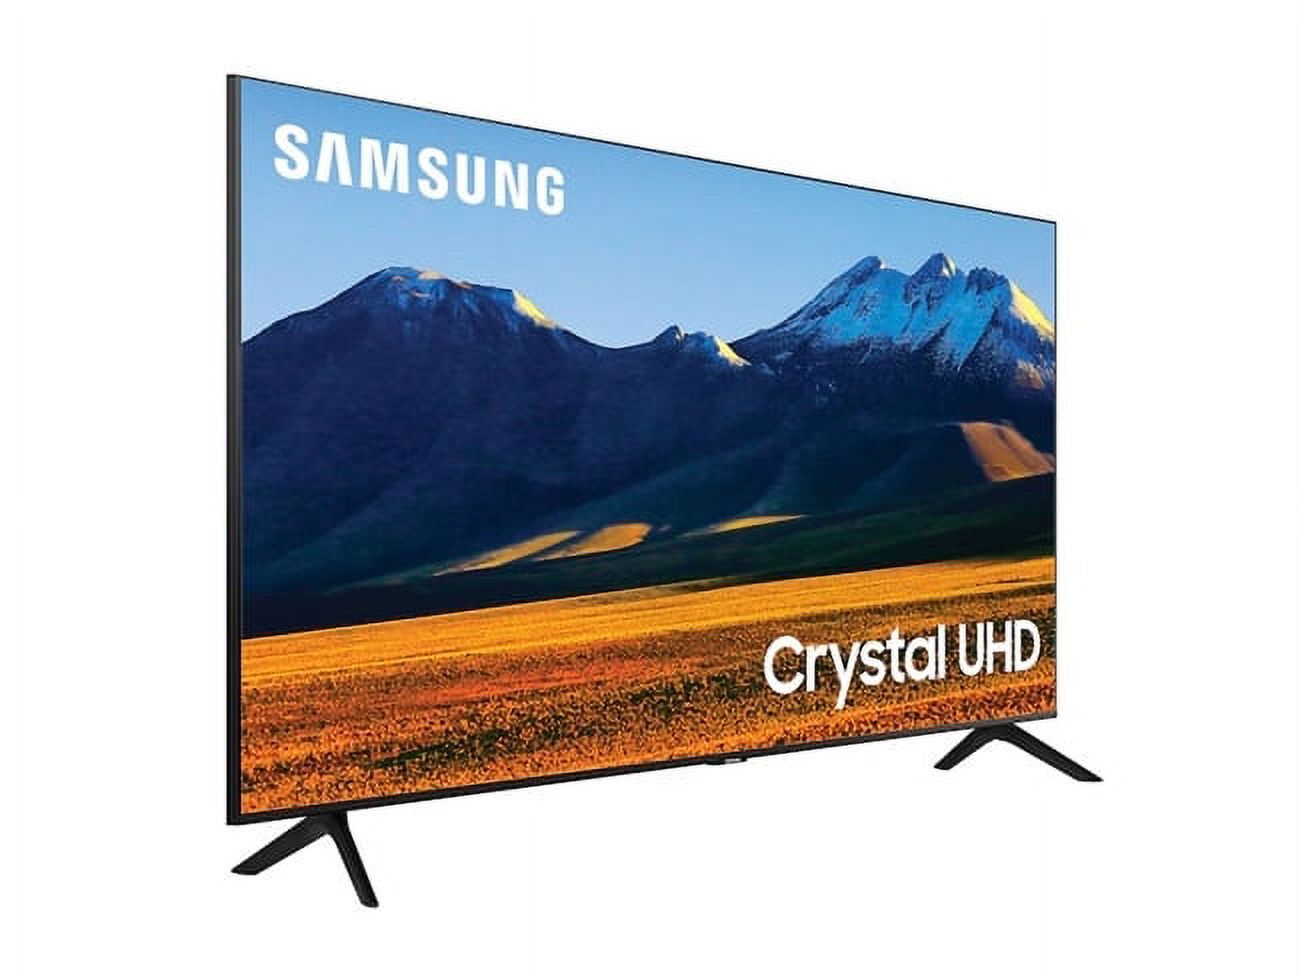 SAMSUNG 86" Class Crystal UHD (2160P) LED Smart TV UN86TU9010FXZA - image 3 of 7